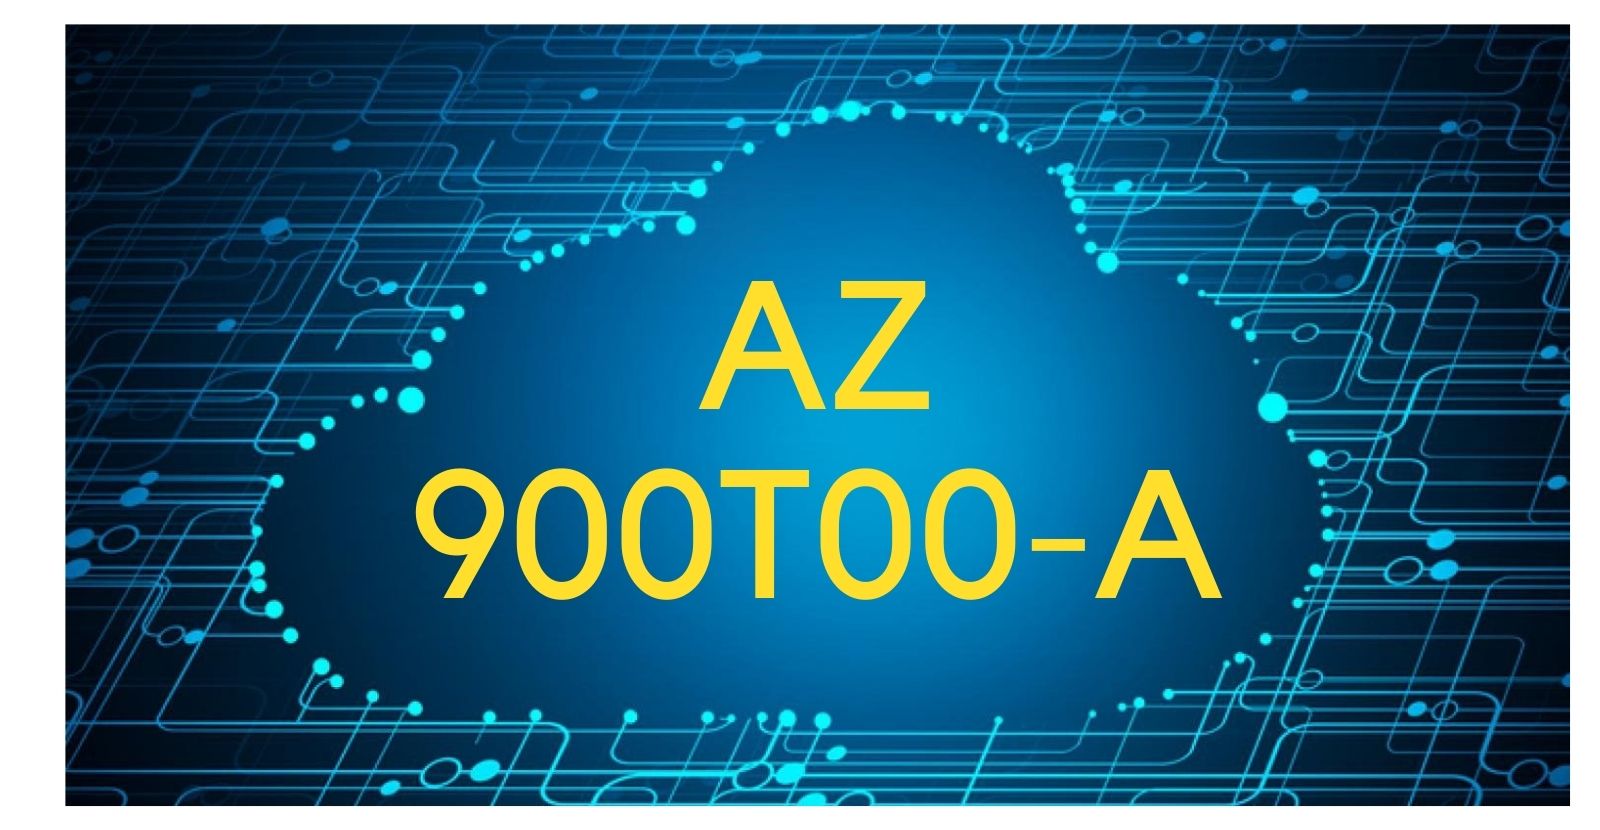 AZ-900T00-A - Microsoft Azure Fundamentals